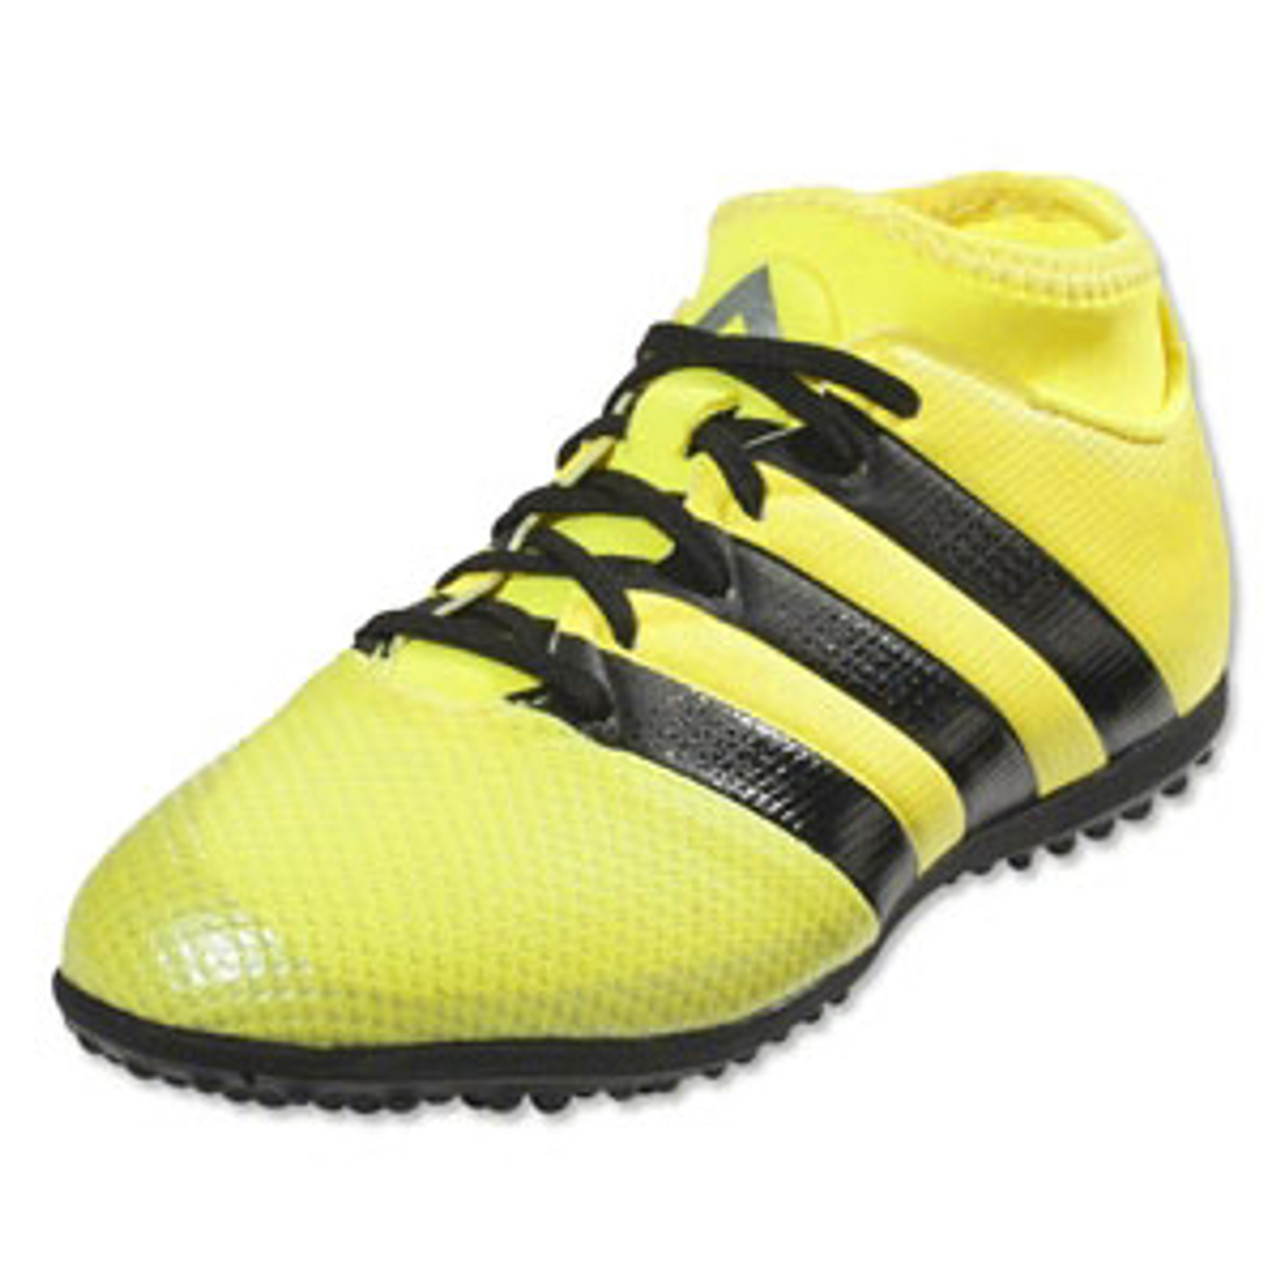 ADIDAS ACE 16.3 PRIMEMESH turf junior shoes yellow - Soccer Plus